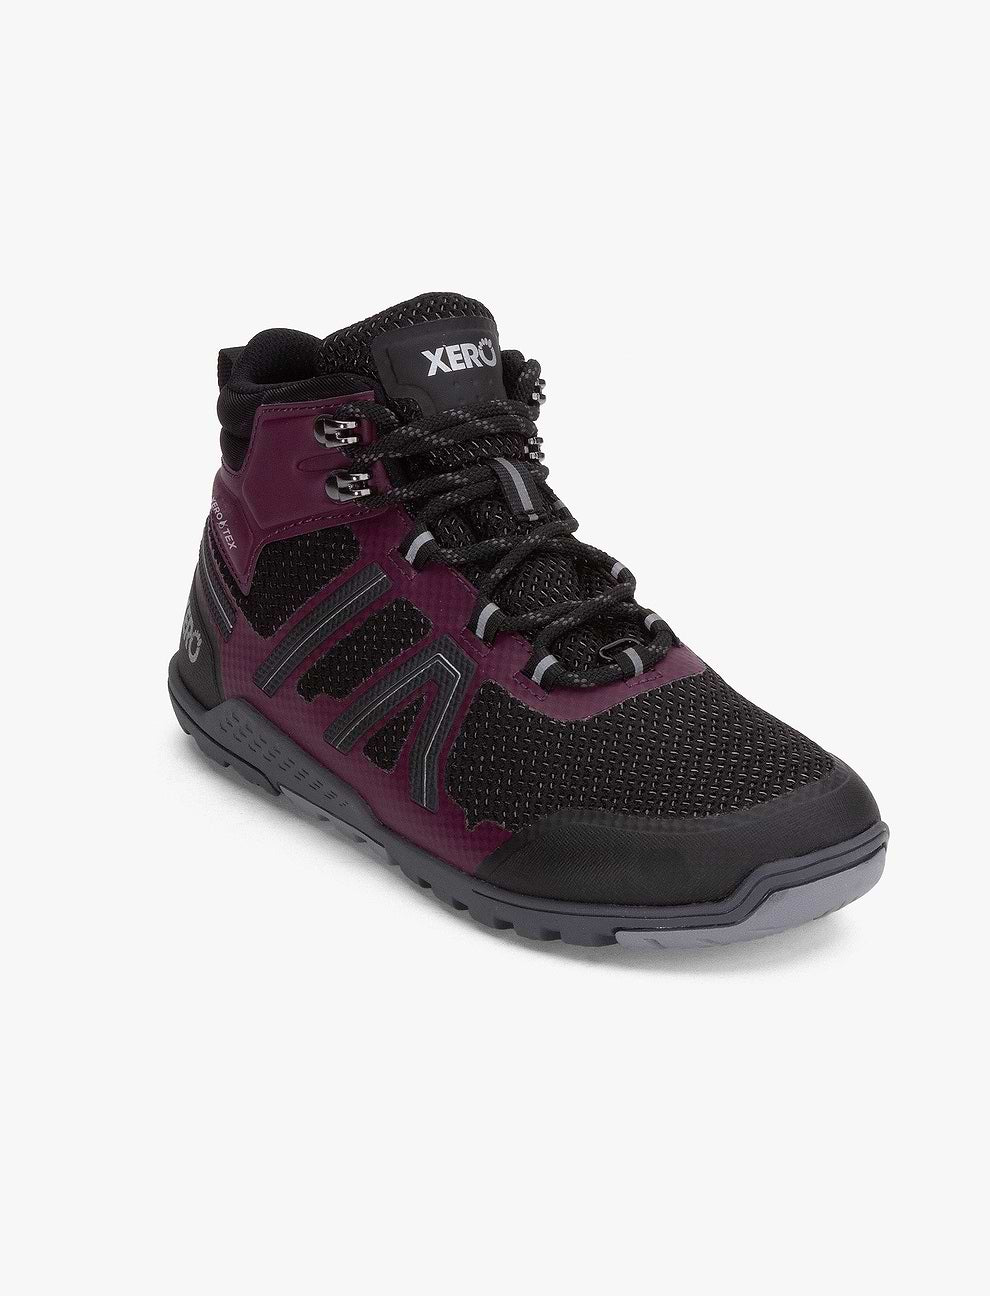 Xero Xcursion Fusion Women - נעלי הרים לנשים זירו-Xero-37.5-נאקו